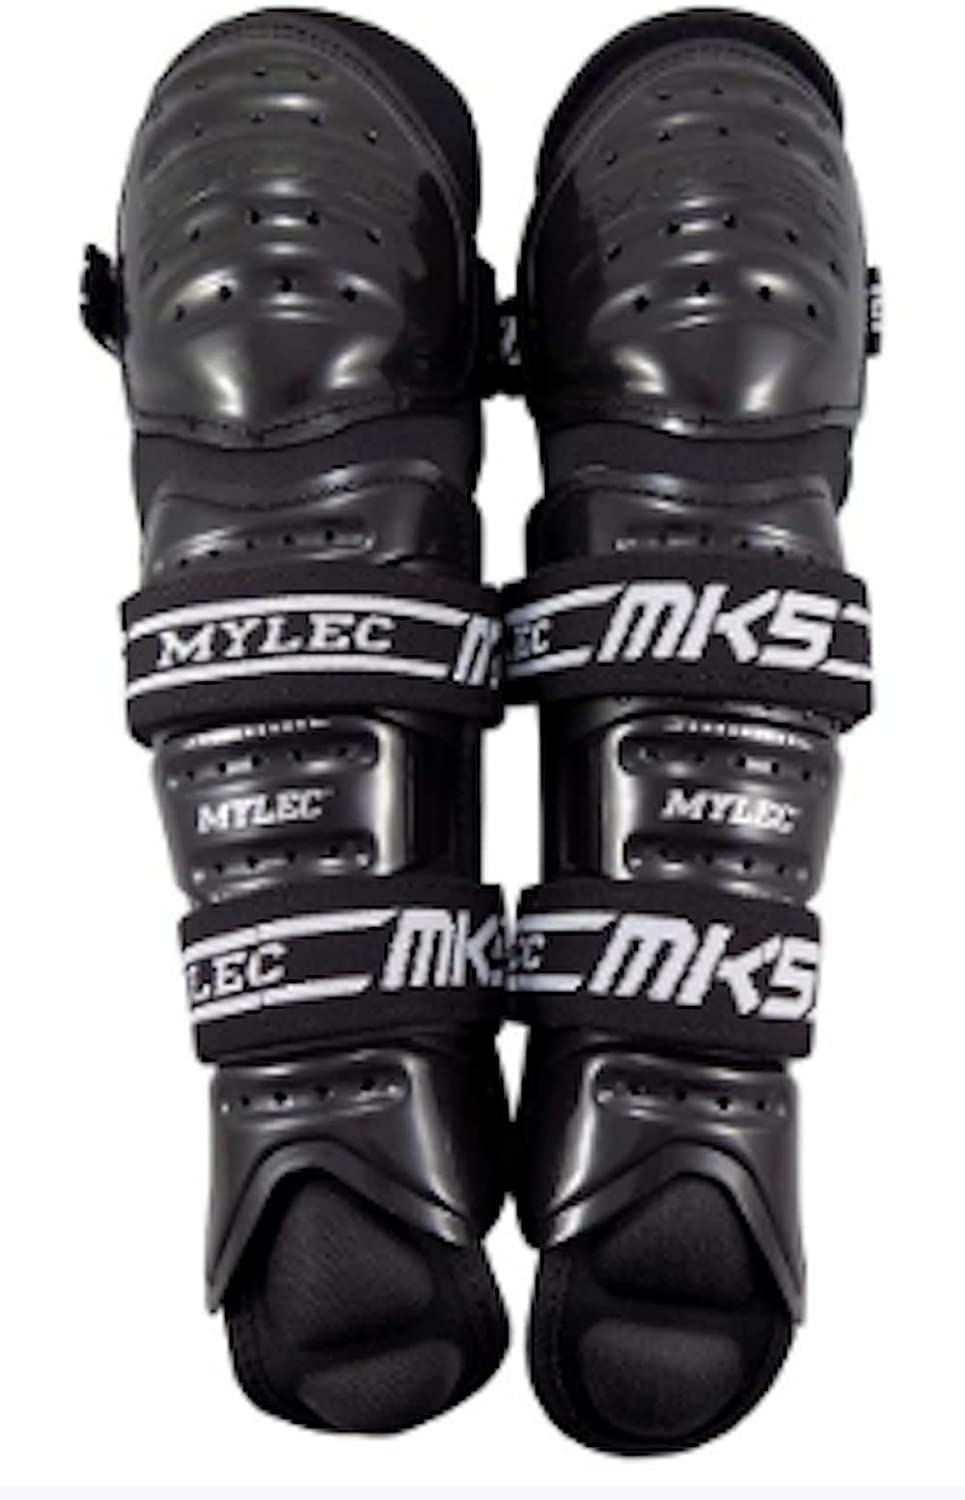 Mylec MK5 9" Pro Roller Hockey, Dek Hockey, Street Hockey Shinguards/Kneepads - Pro-Distributing